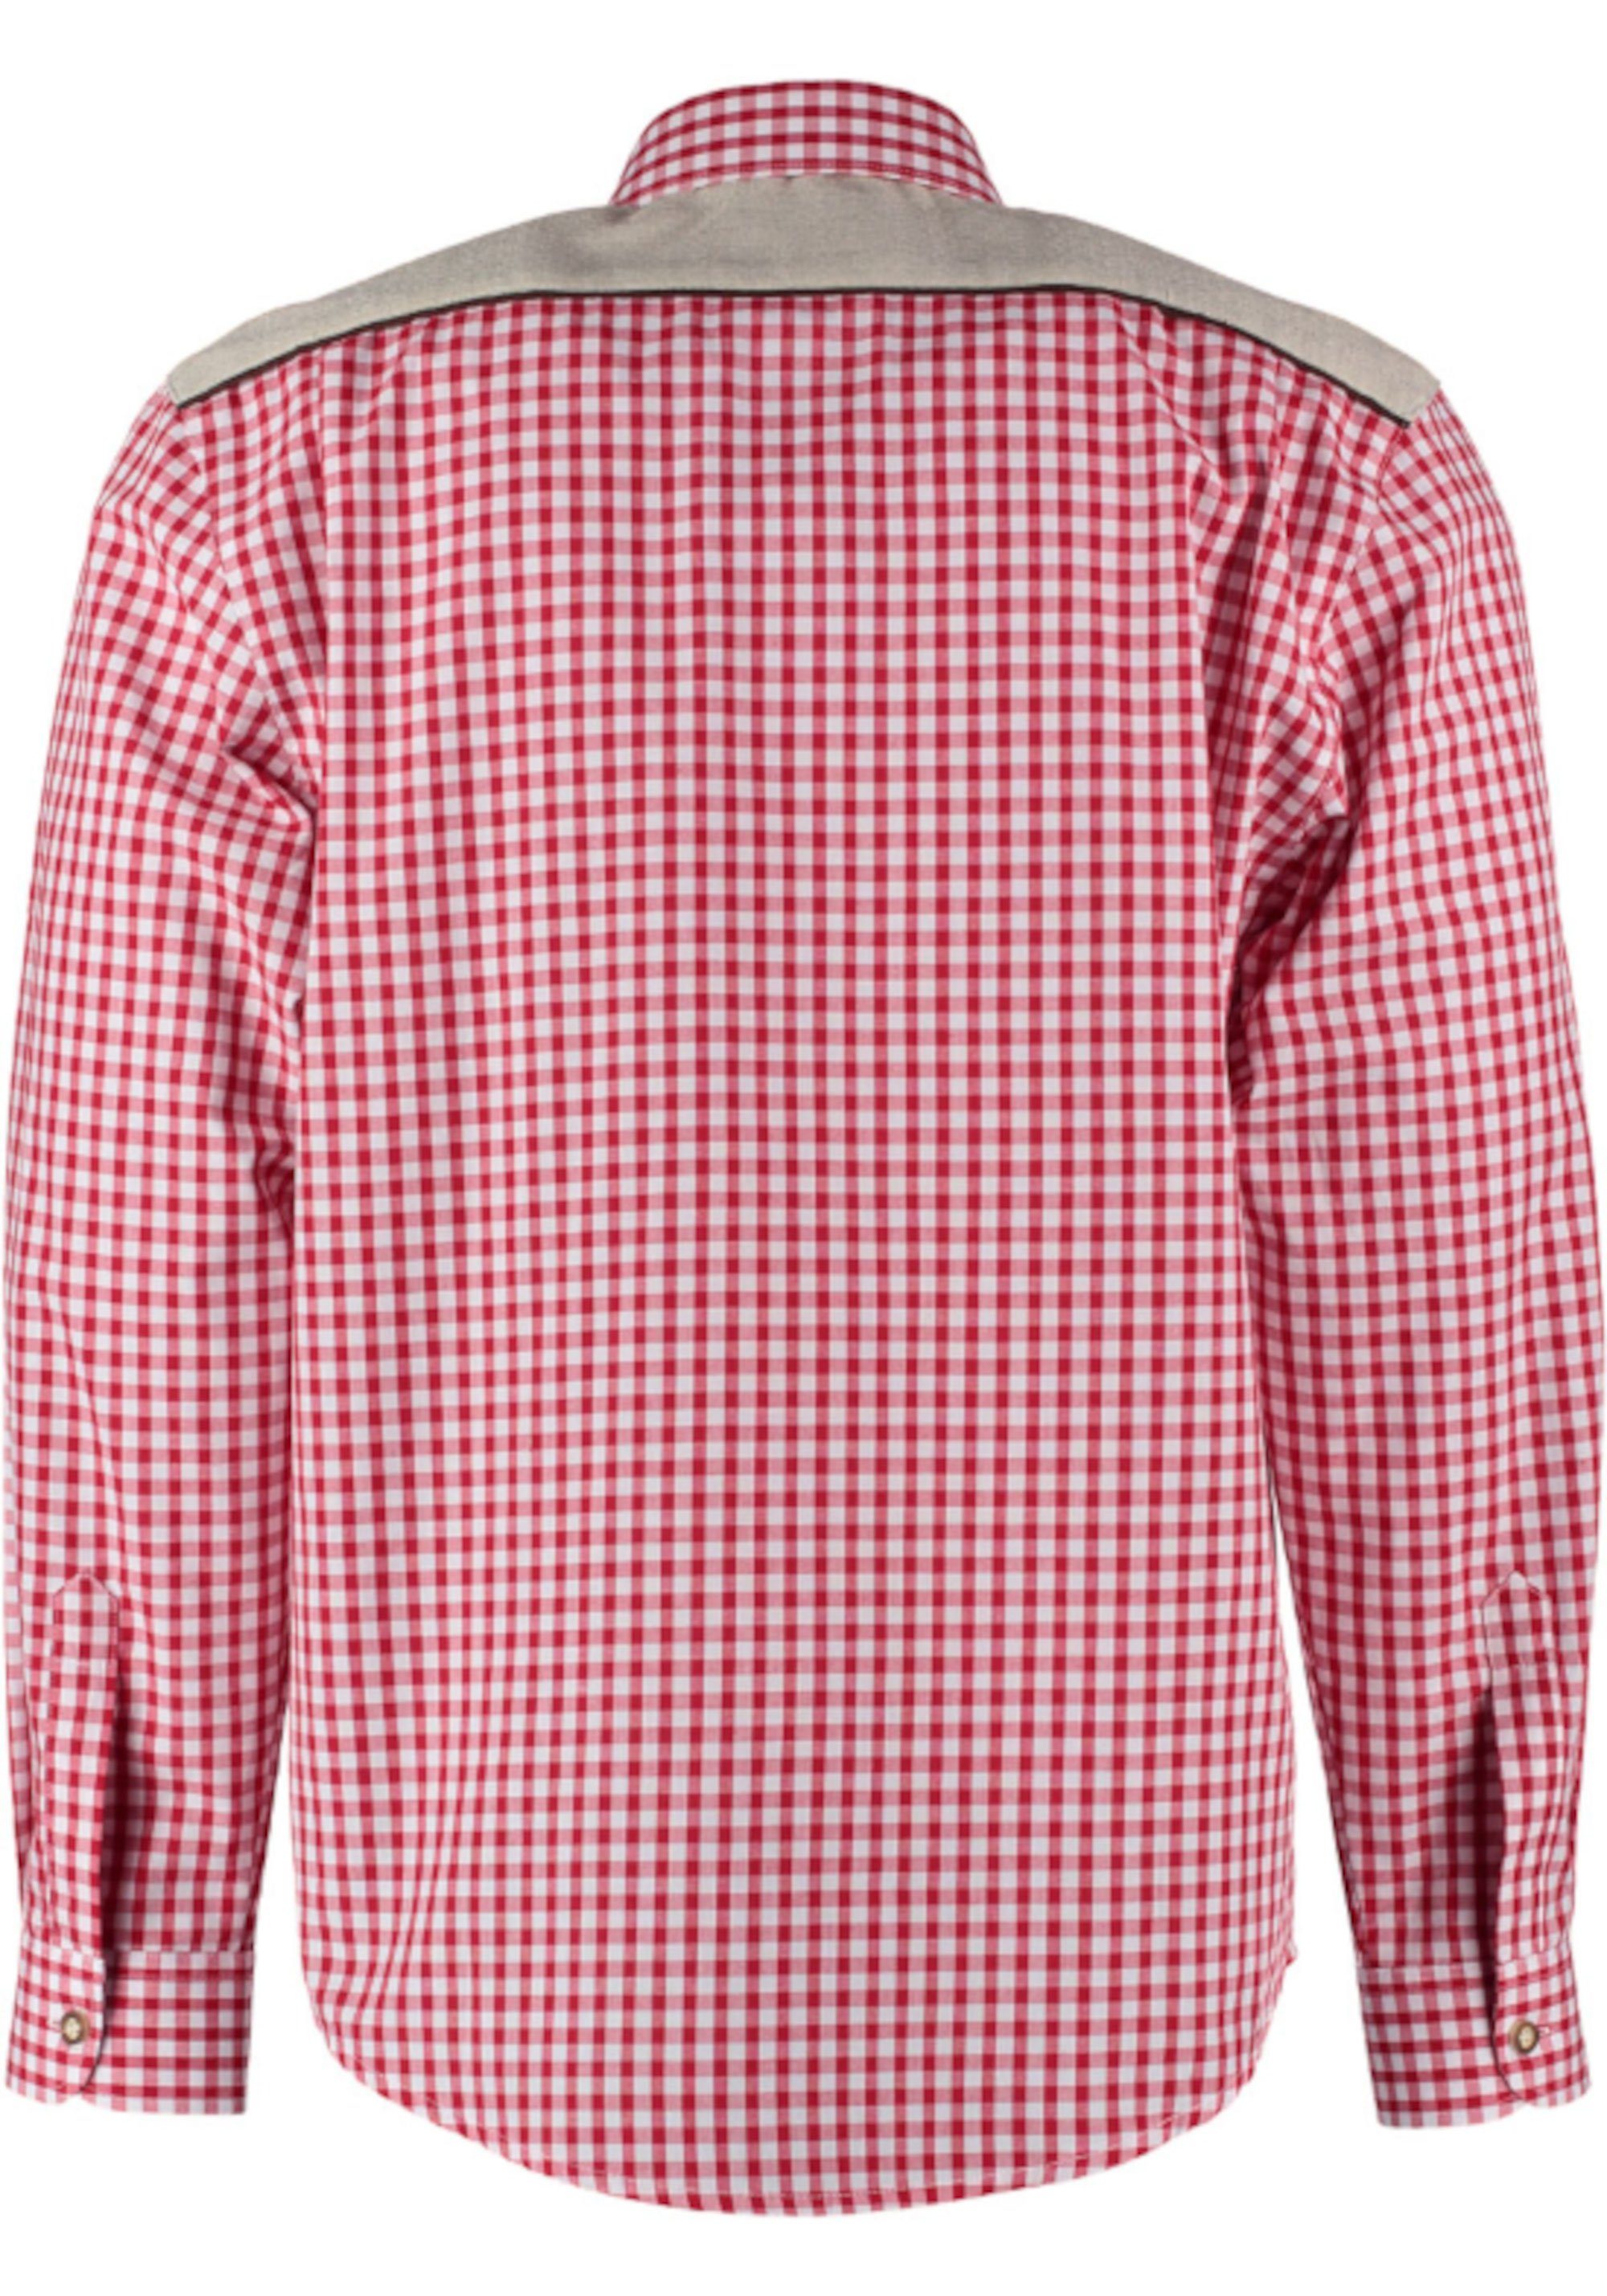 TH-0215 rot-weiß Fit-bequemer Stickerei Schnitt Regular gerader orbis Kentkragen, Krempelarm Trachtenhemd